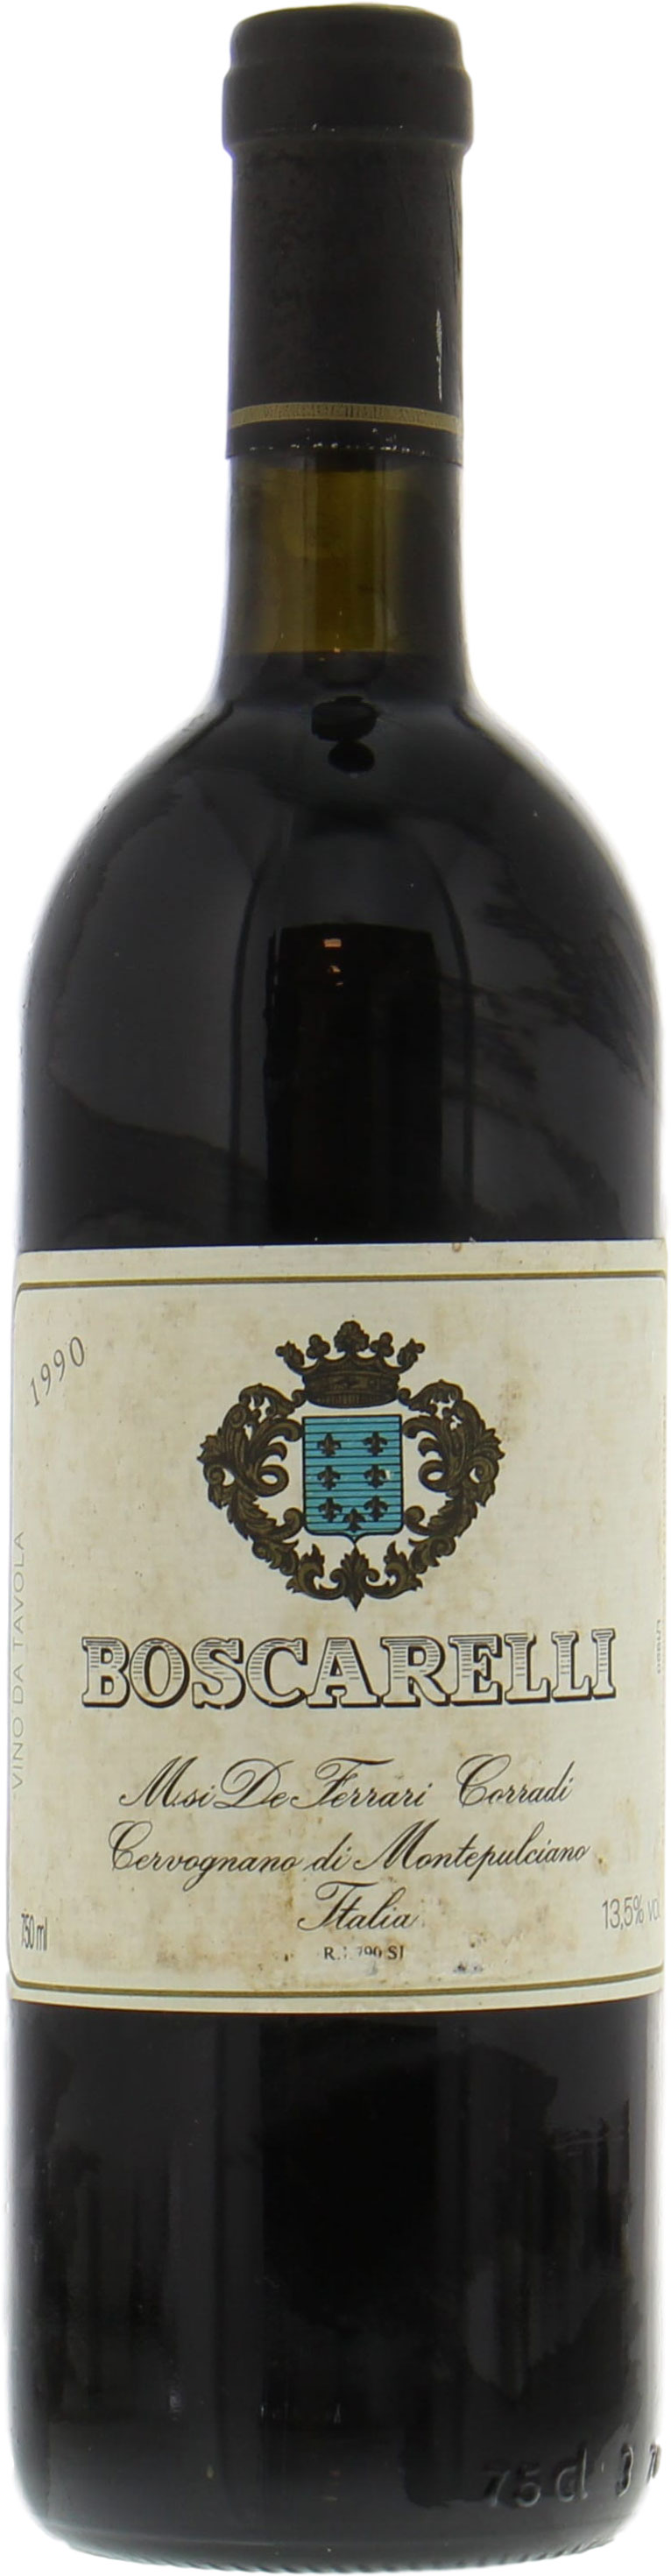 Boscarelli - Proprietary Red Wine 1990 Perfect